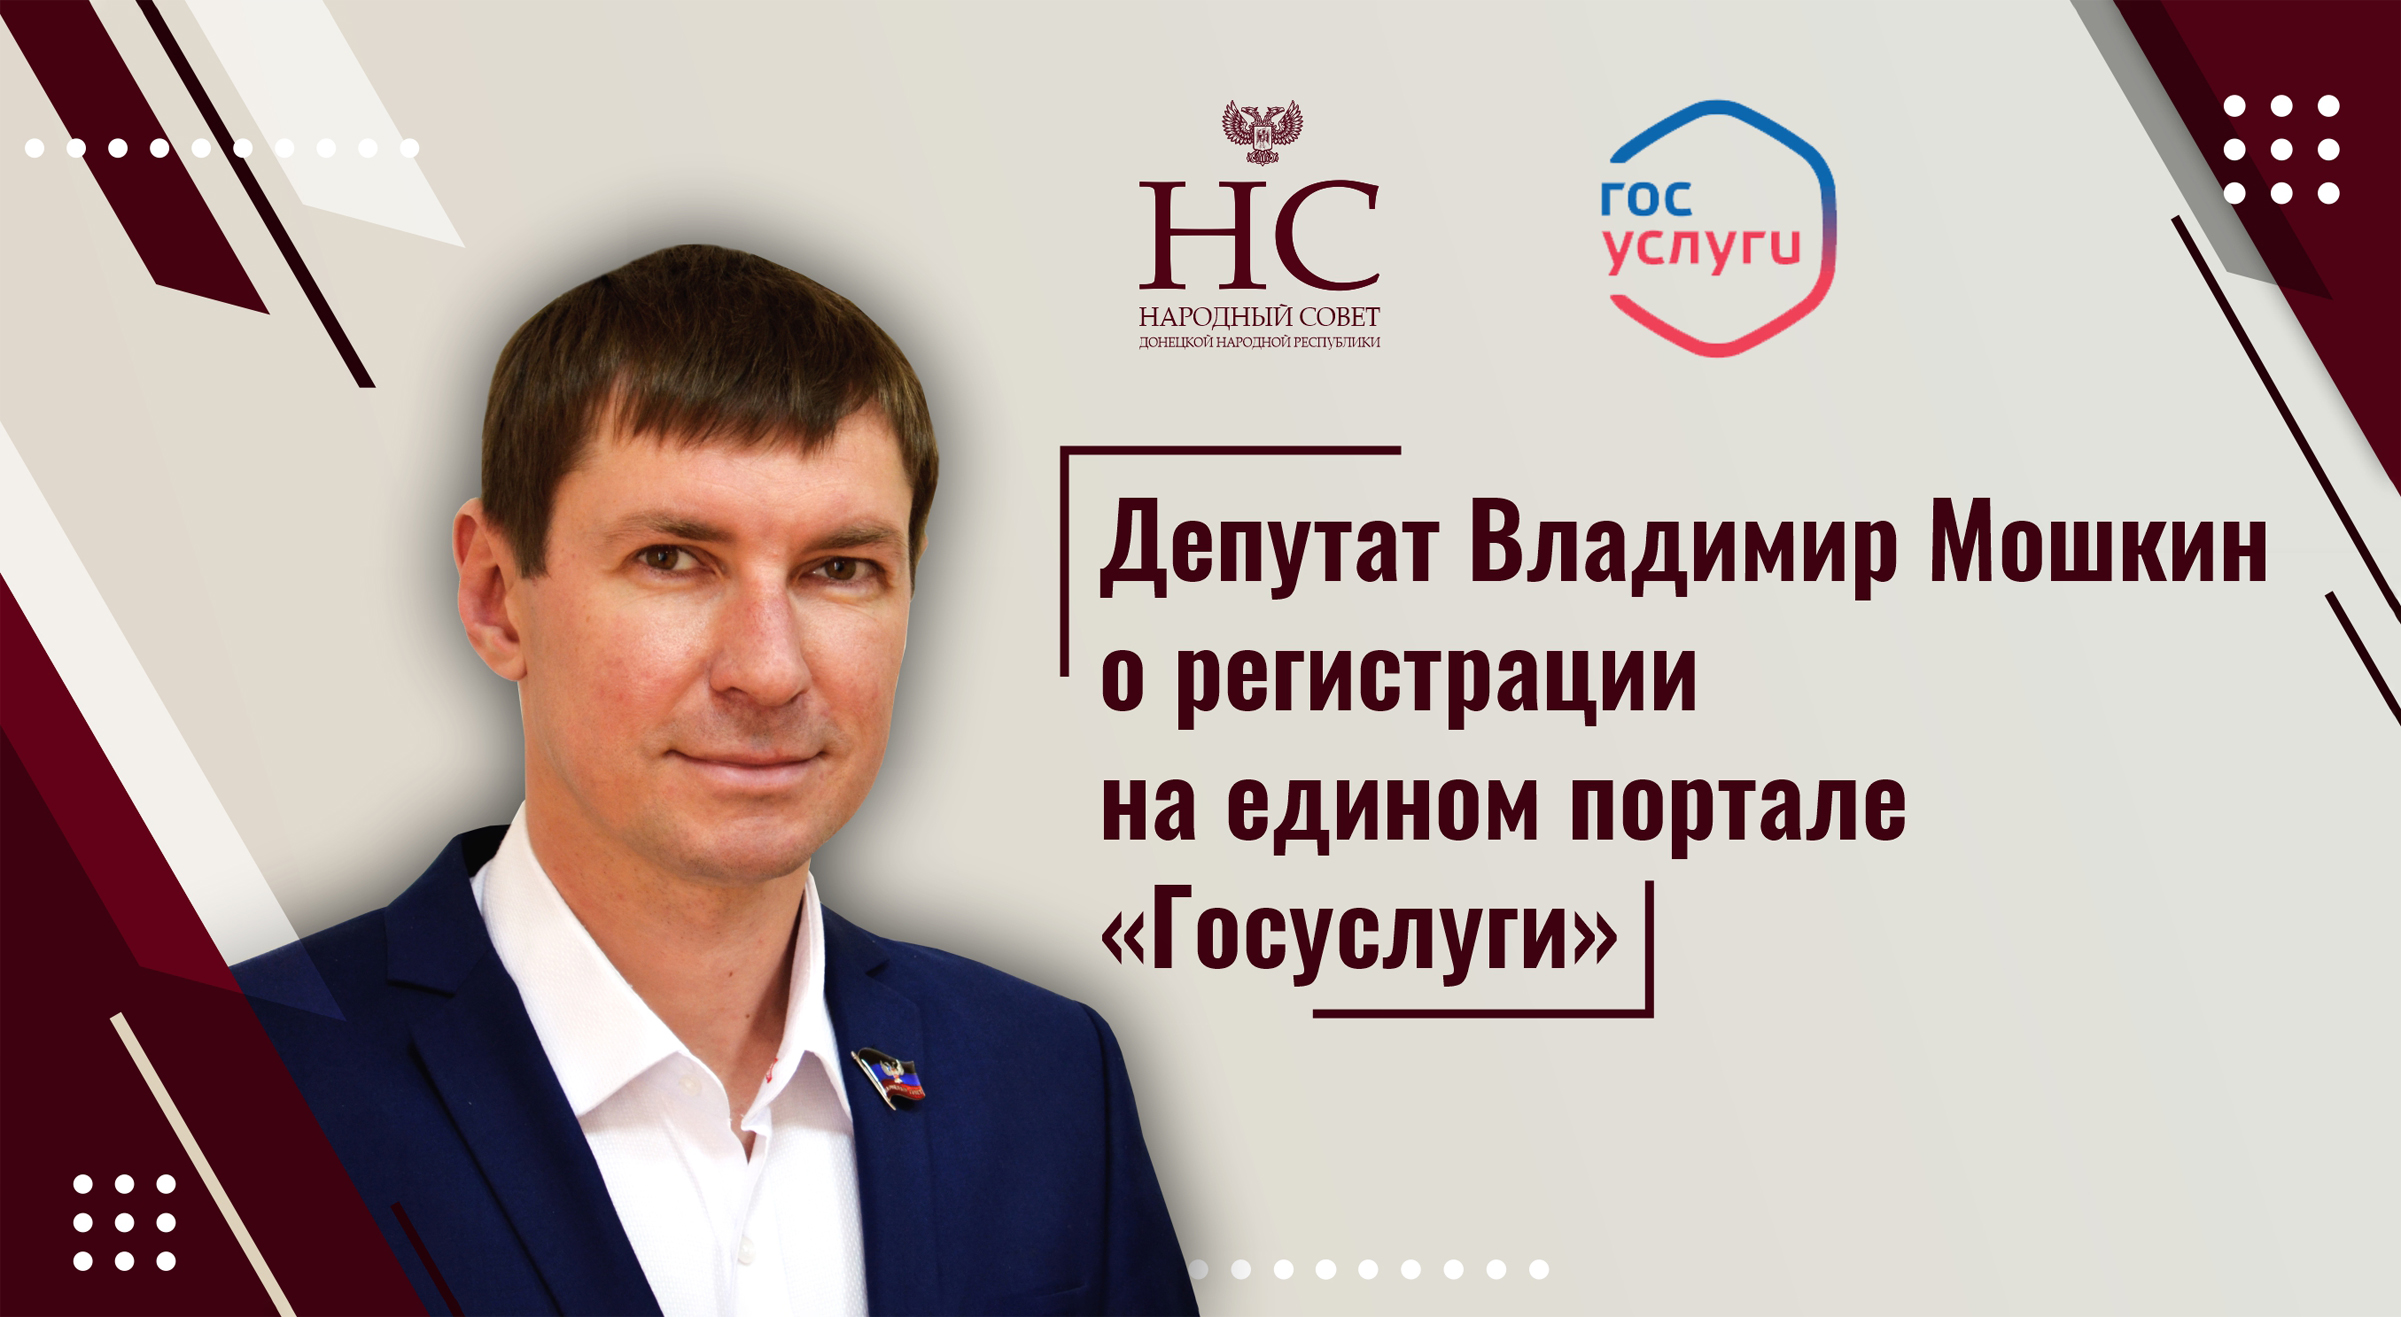 Депутат Владимир Мошкин о регистрации на едином портале госуслуг.